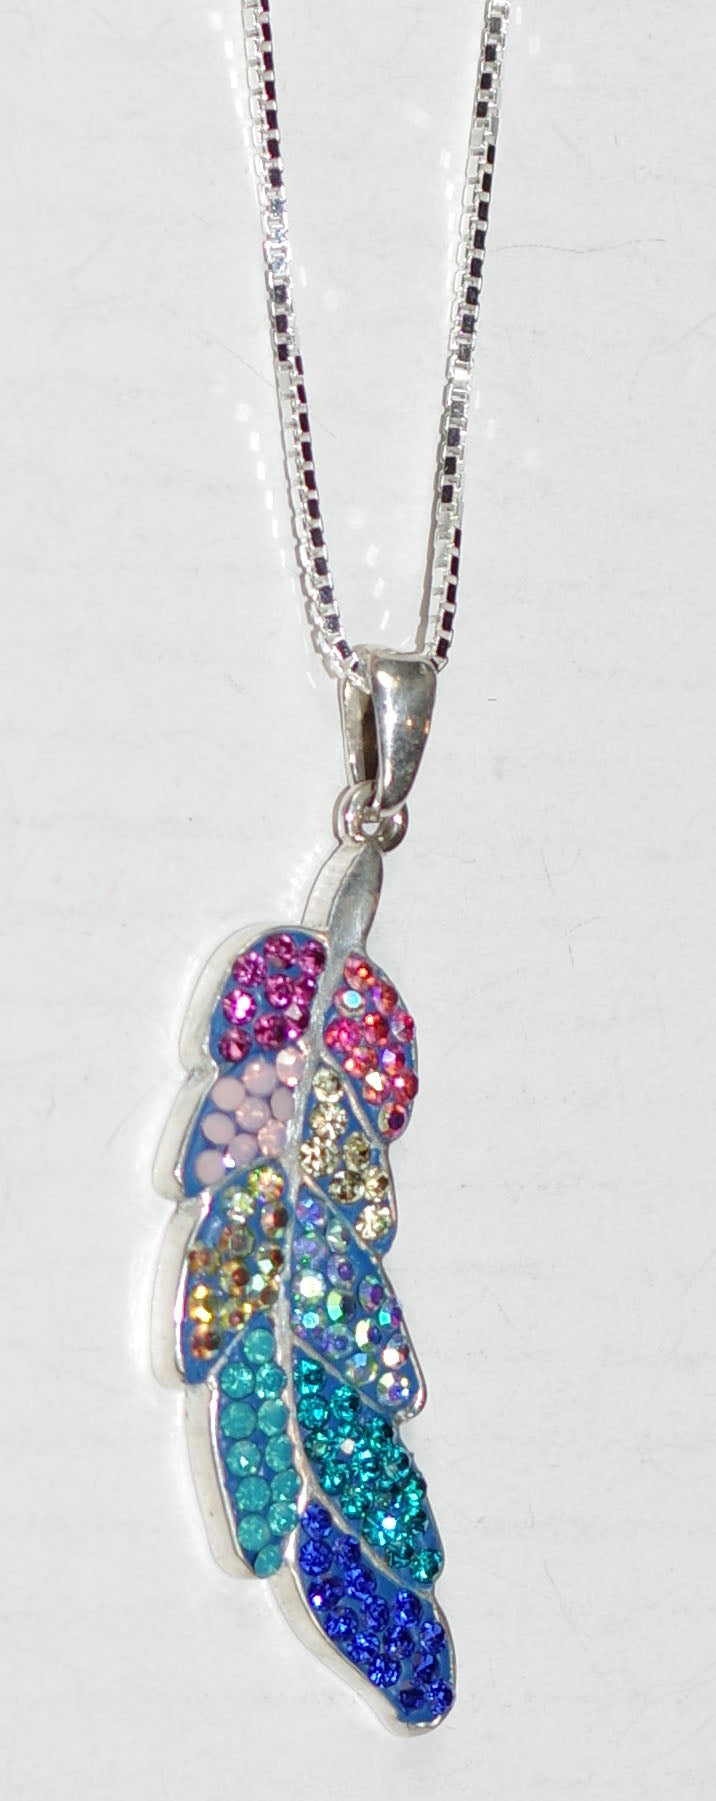 MOSAICO PENDANT PP-8699-A: multi color Austrian crystals in 1.25" solid silver pendant, 18-20 inch adjustable silver chain